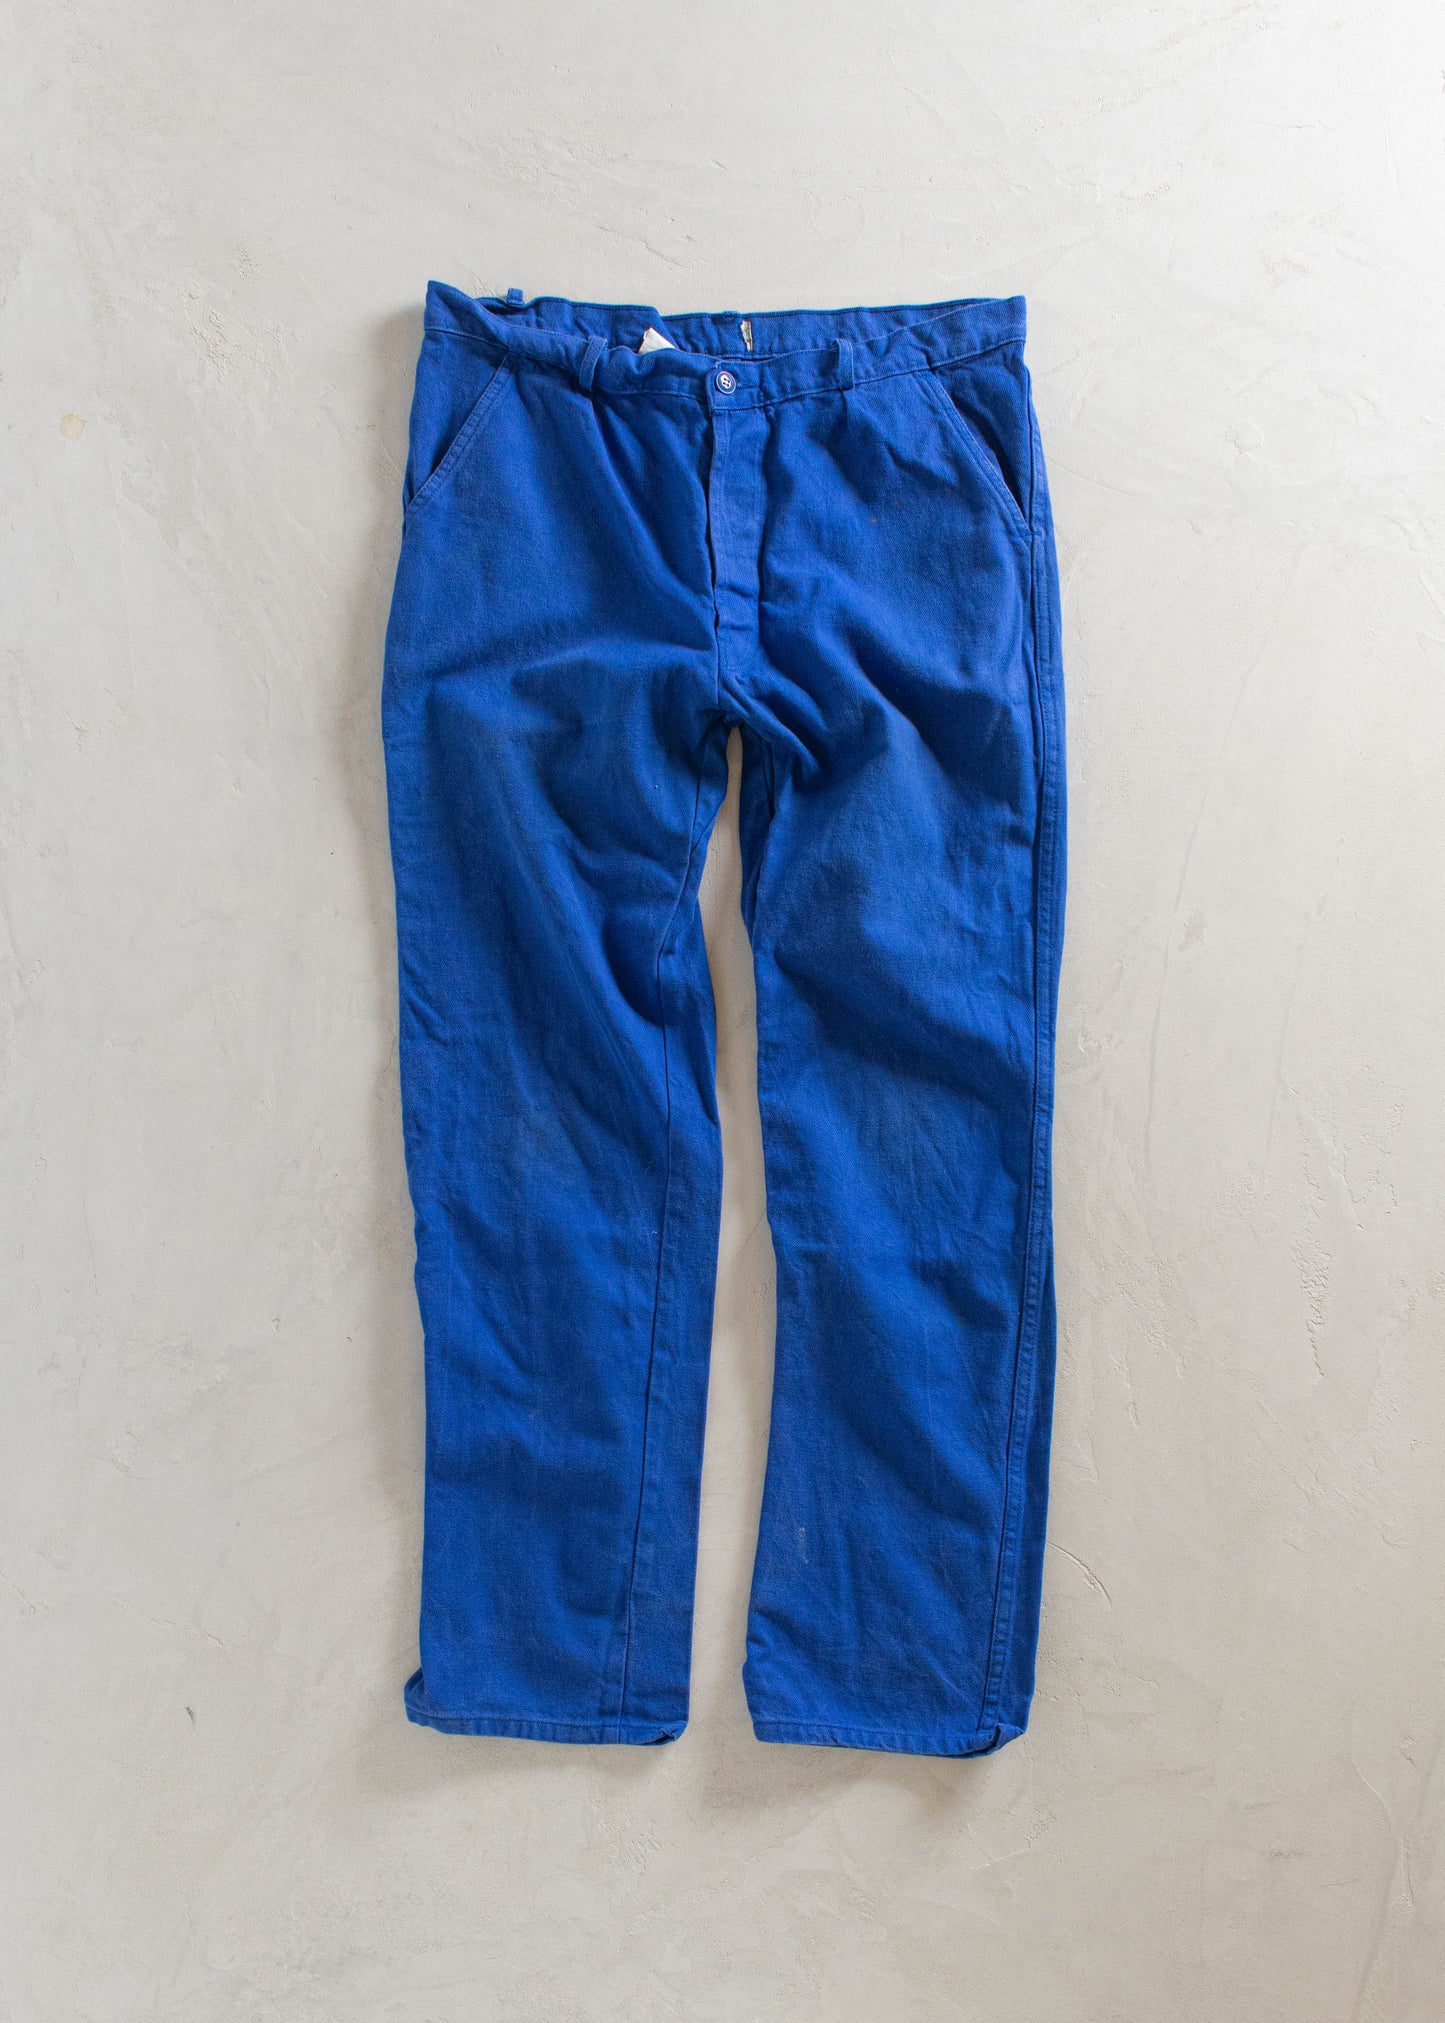 1980s LMA French Workwear Chore Pants Size Women's 34 Men's 36